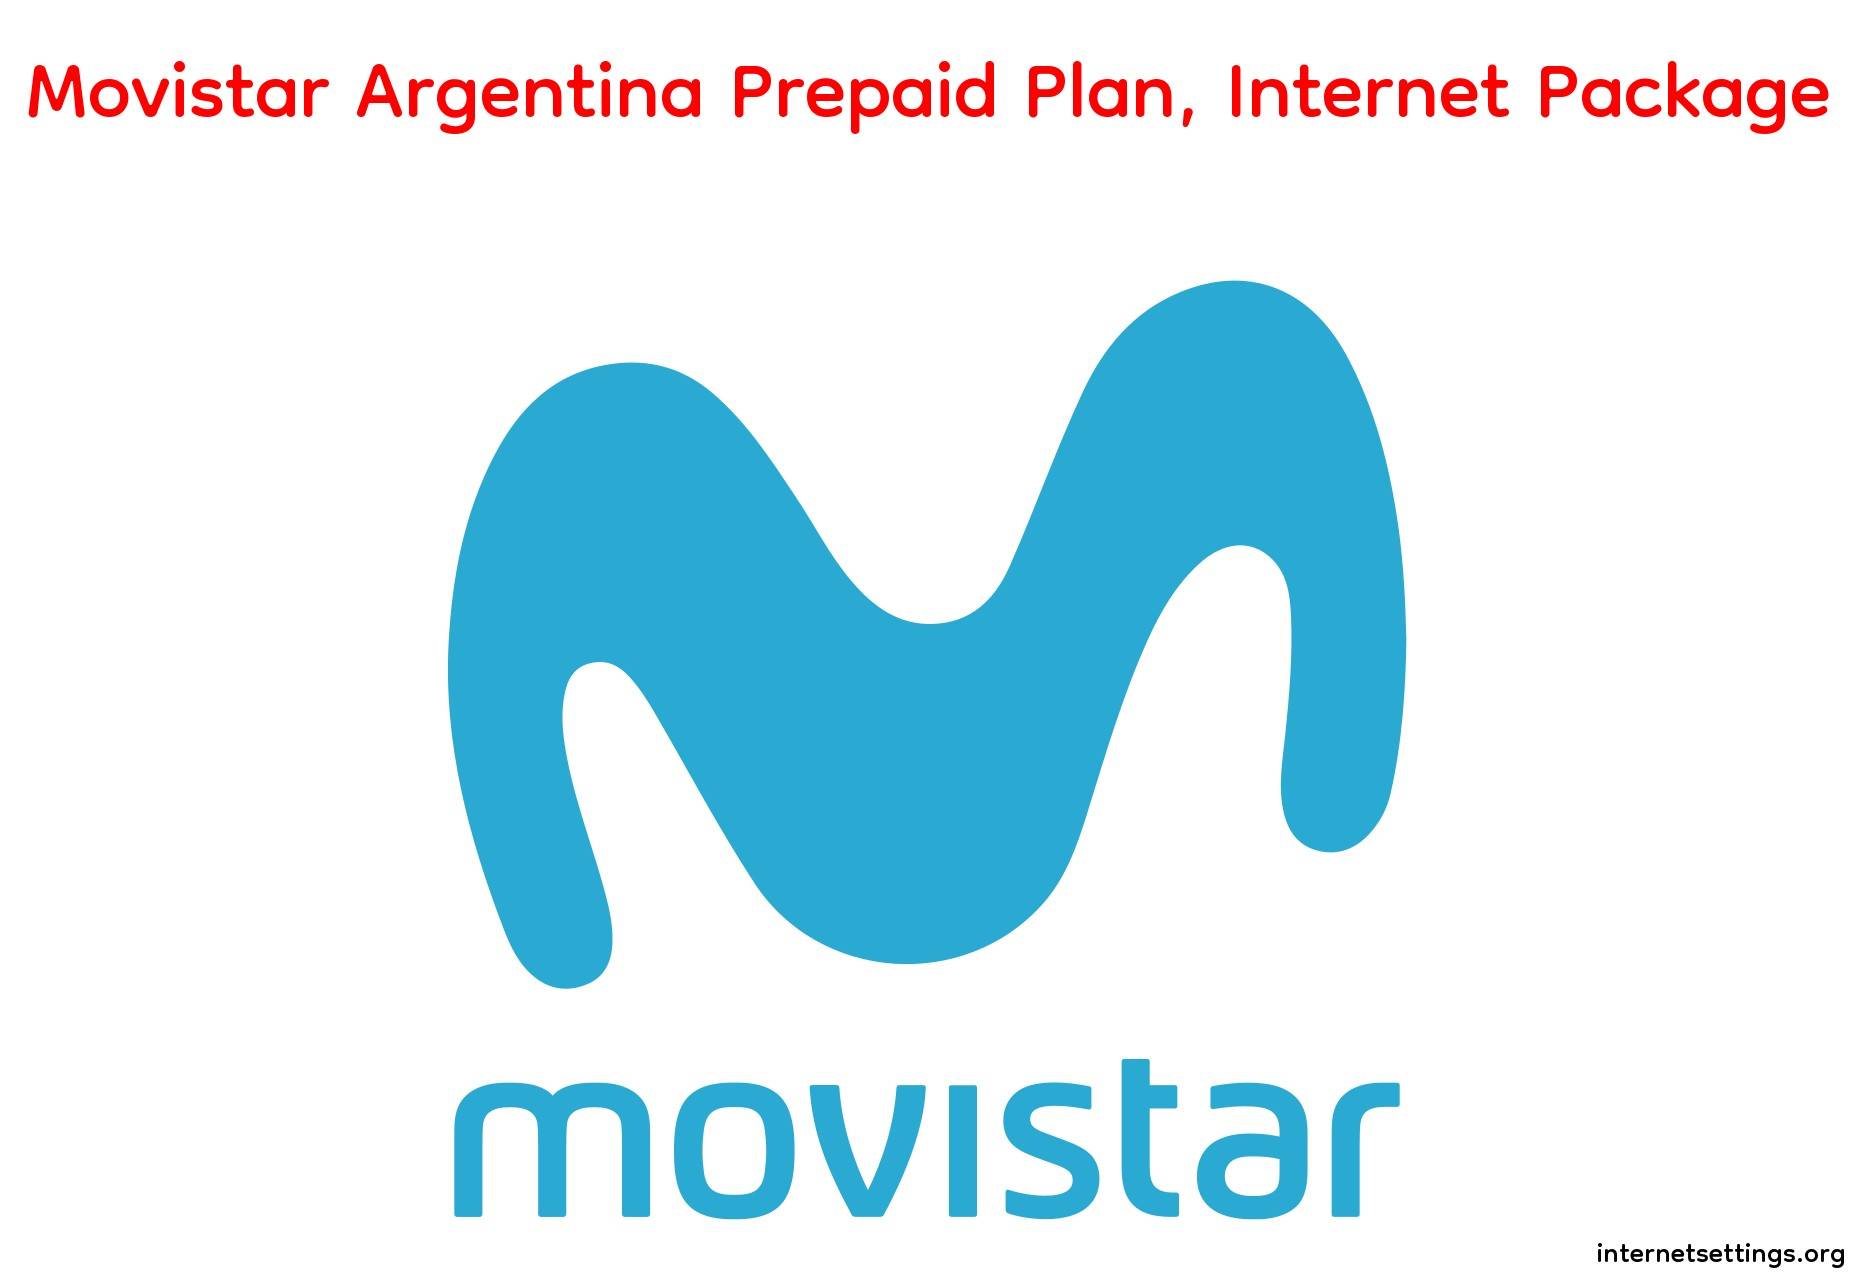 Movistar Argentina Prepaid Plan Internet Package
